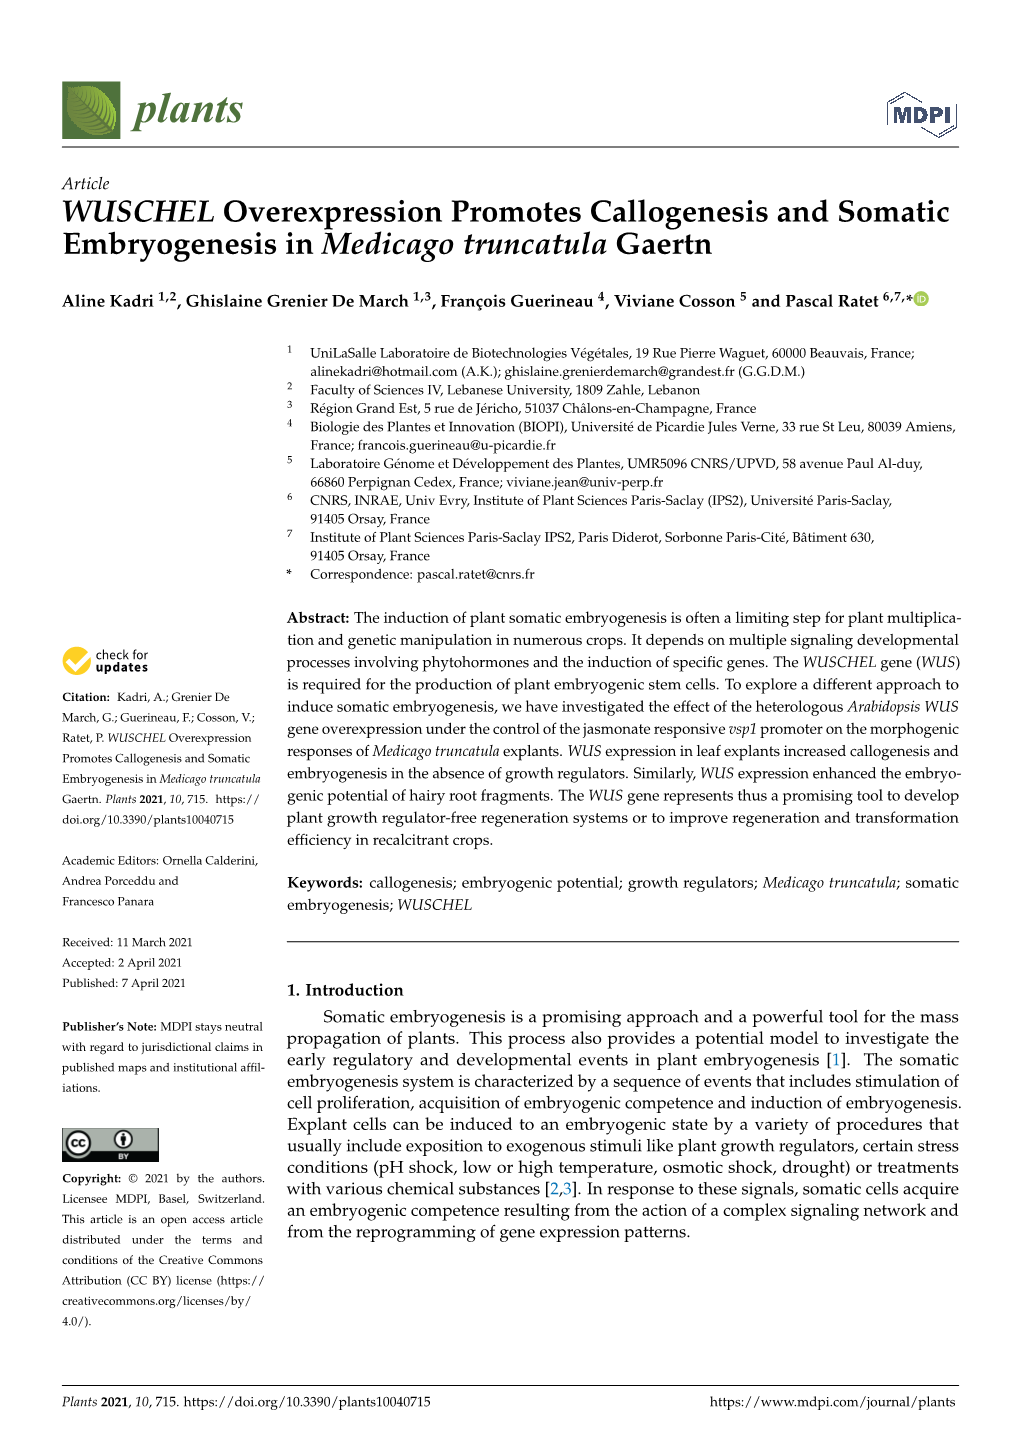 WUSCHEL Overexpression Promotes Callogenesis and Somatic Embryogenesis in Medicago Truncatula Gaertn